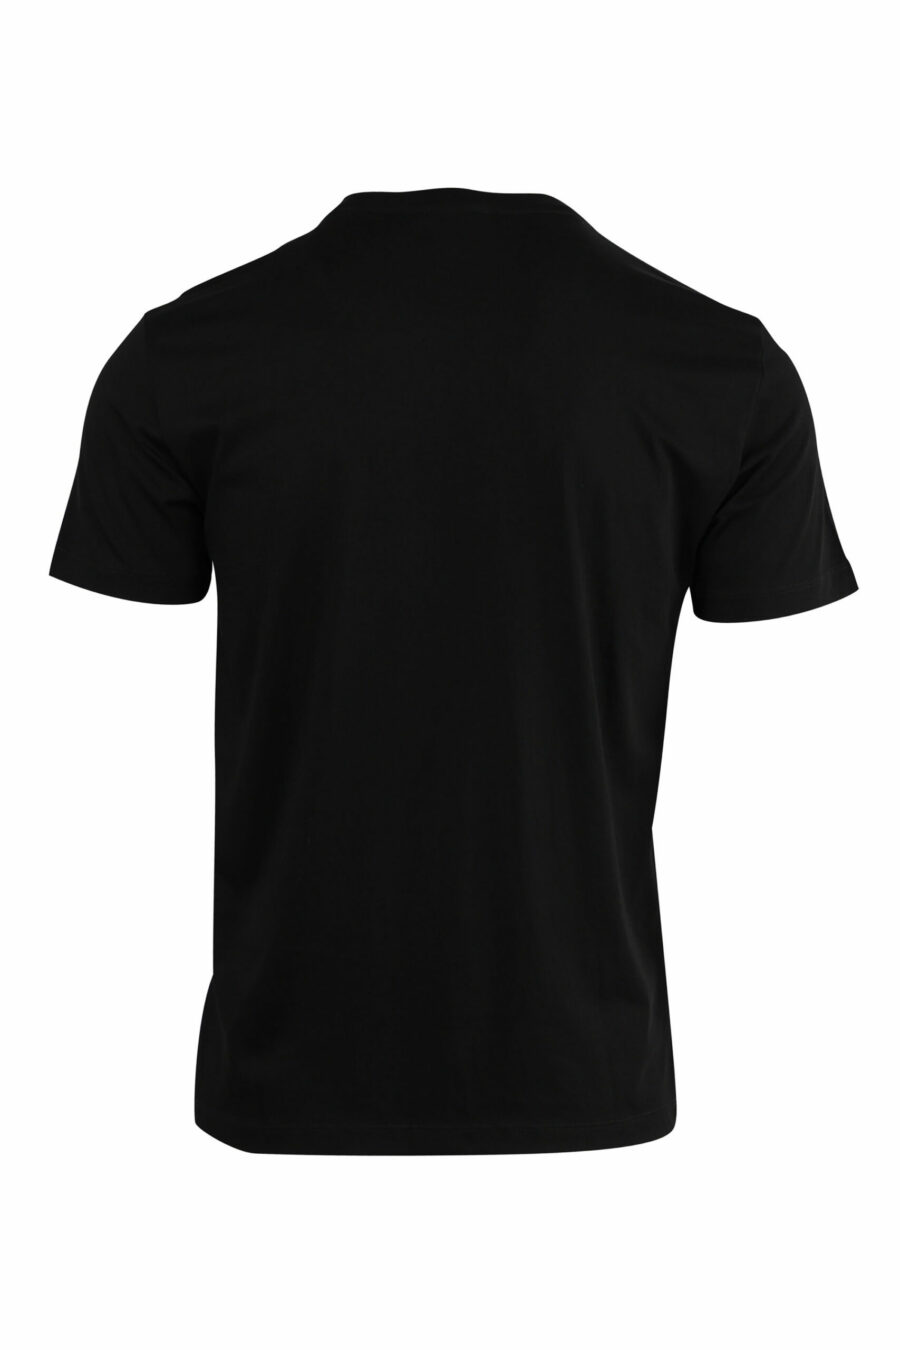 T-shirt preta com mini-logotipo dourado "lux identity" - 8057767515805 2 scaled